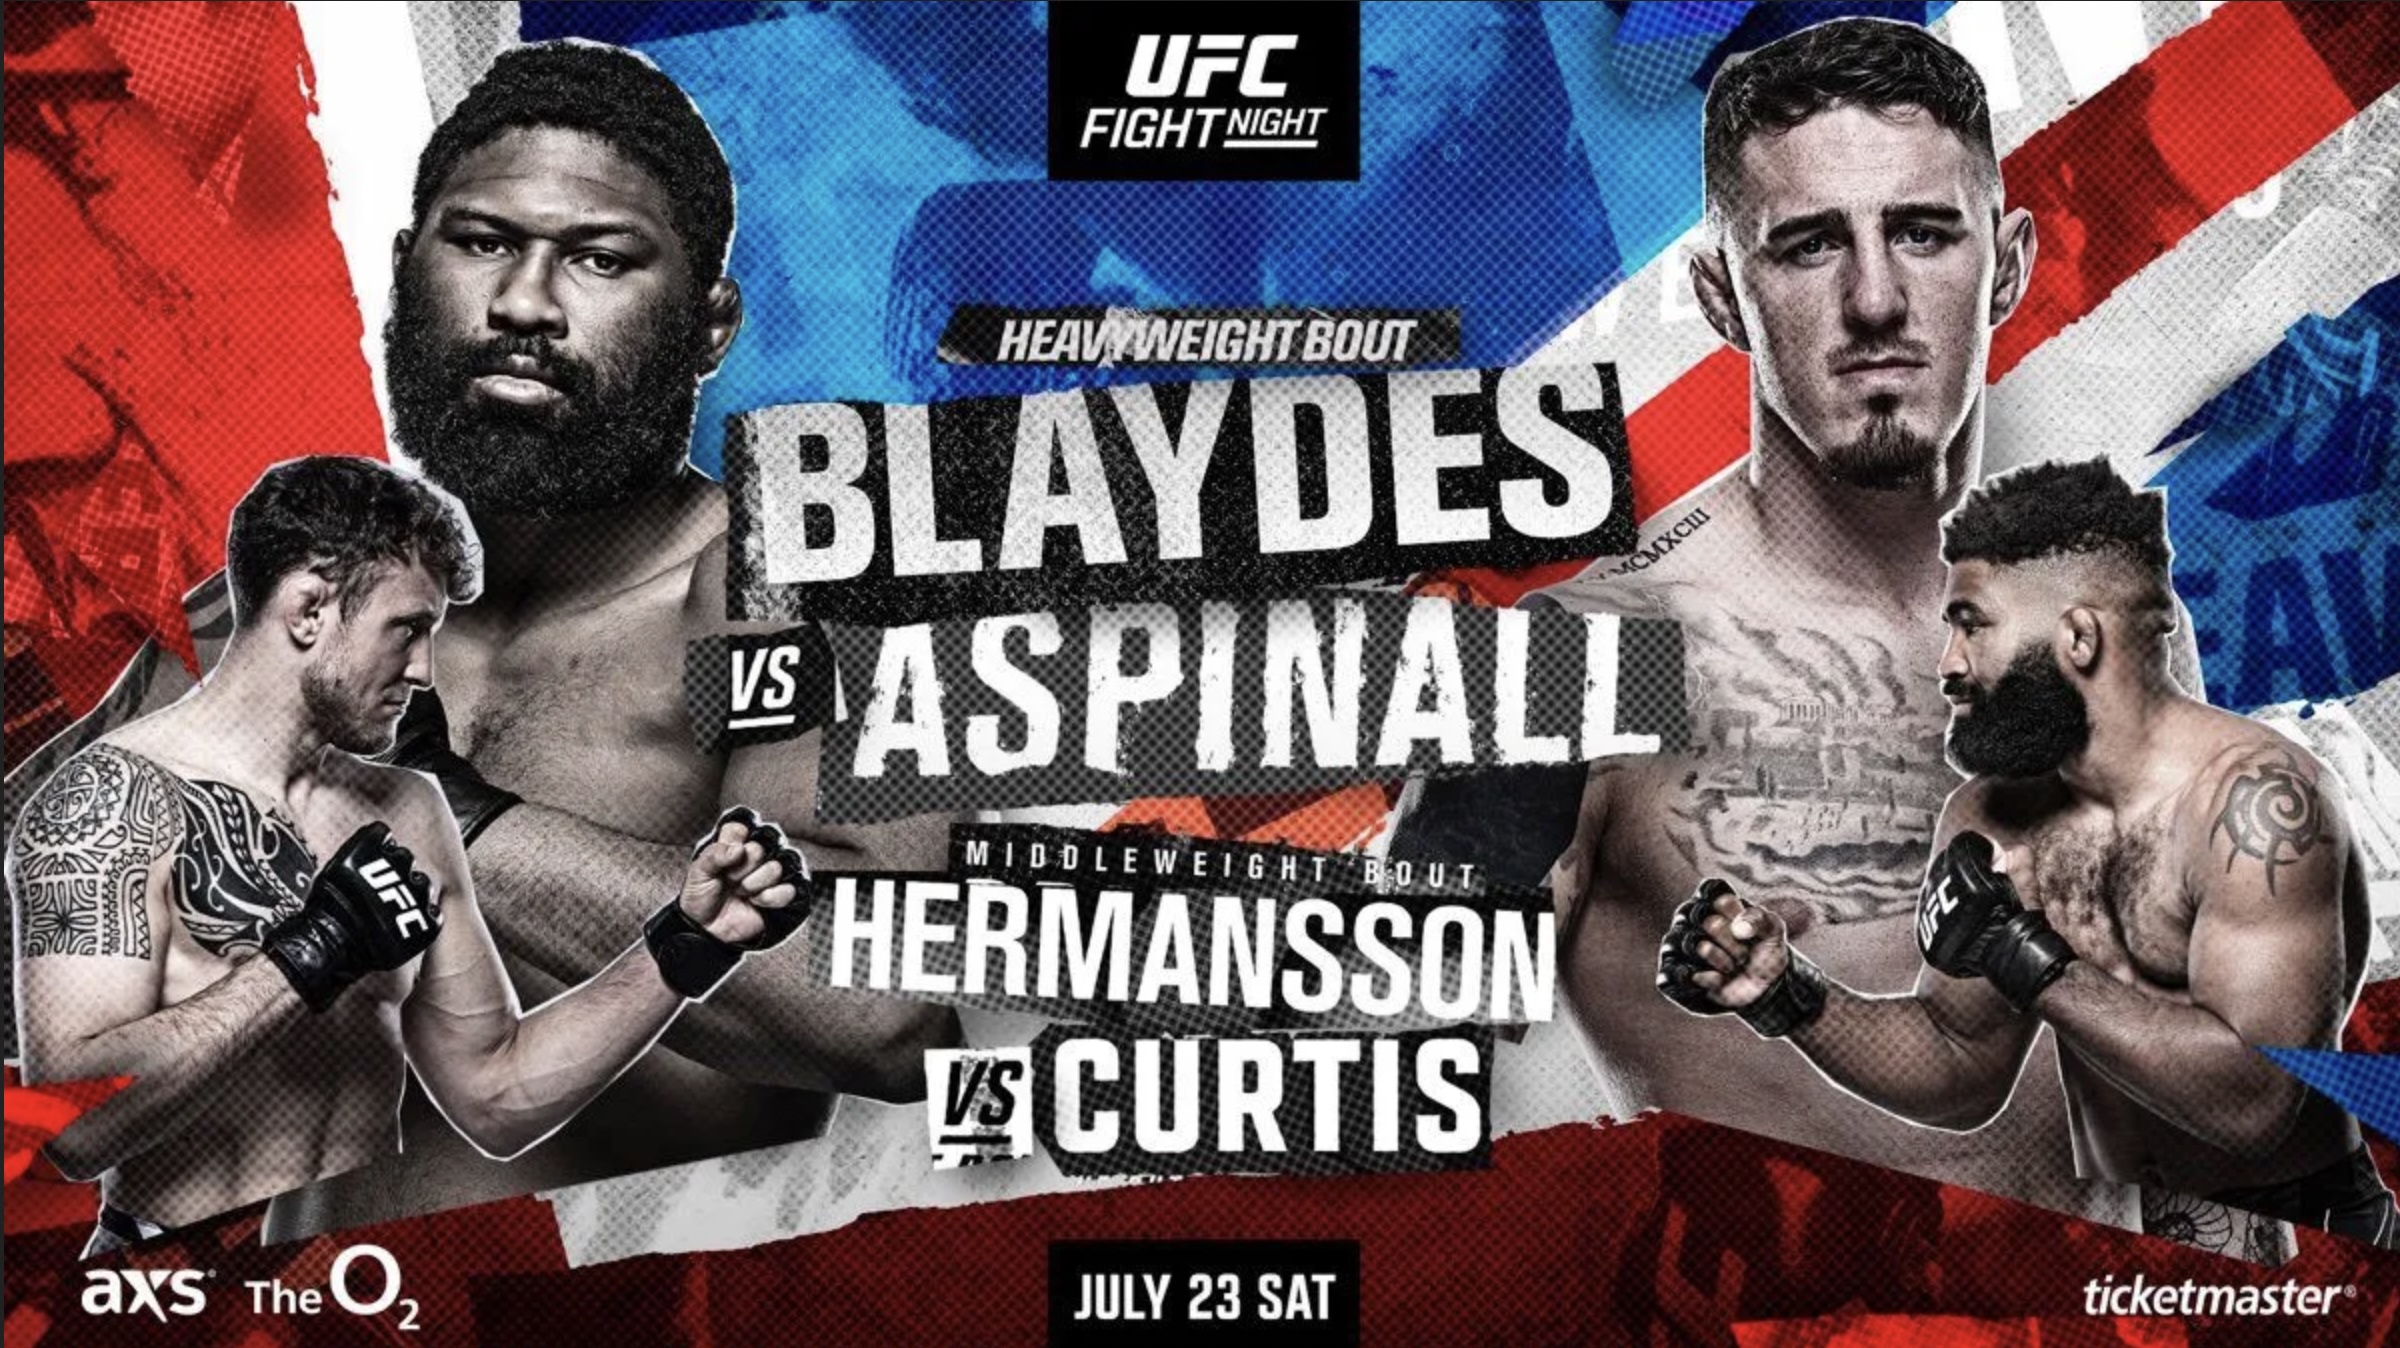 Blades vs Aspinal UFC London